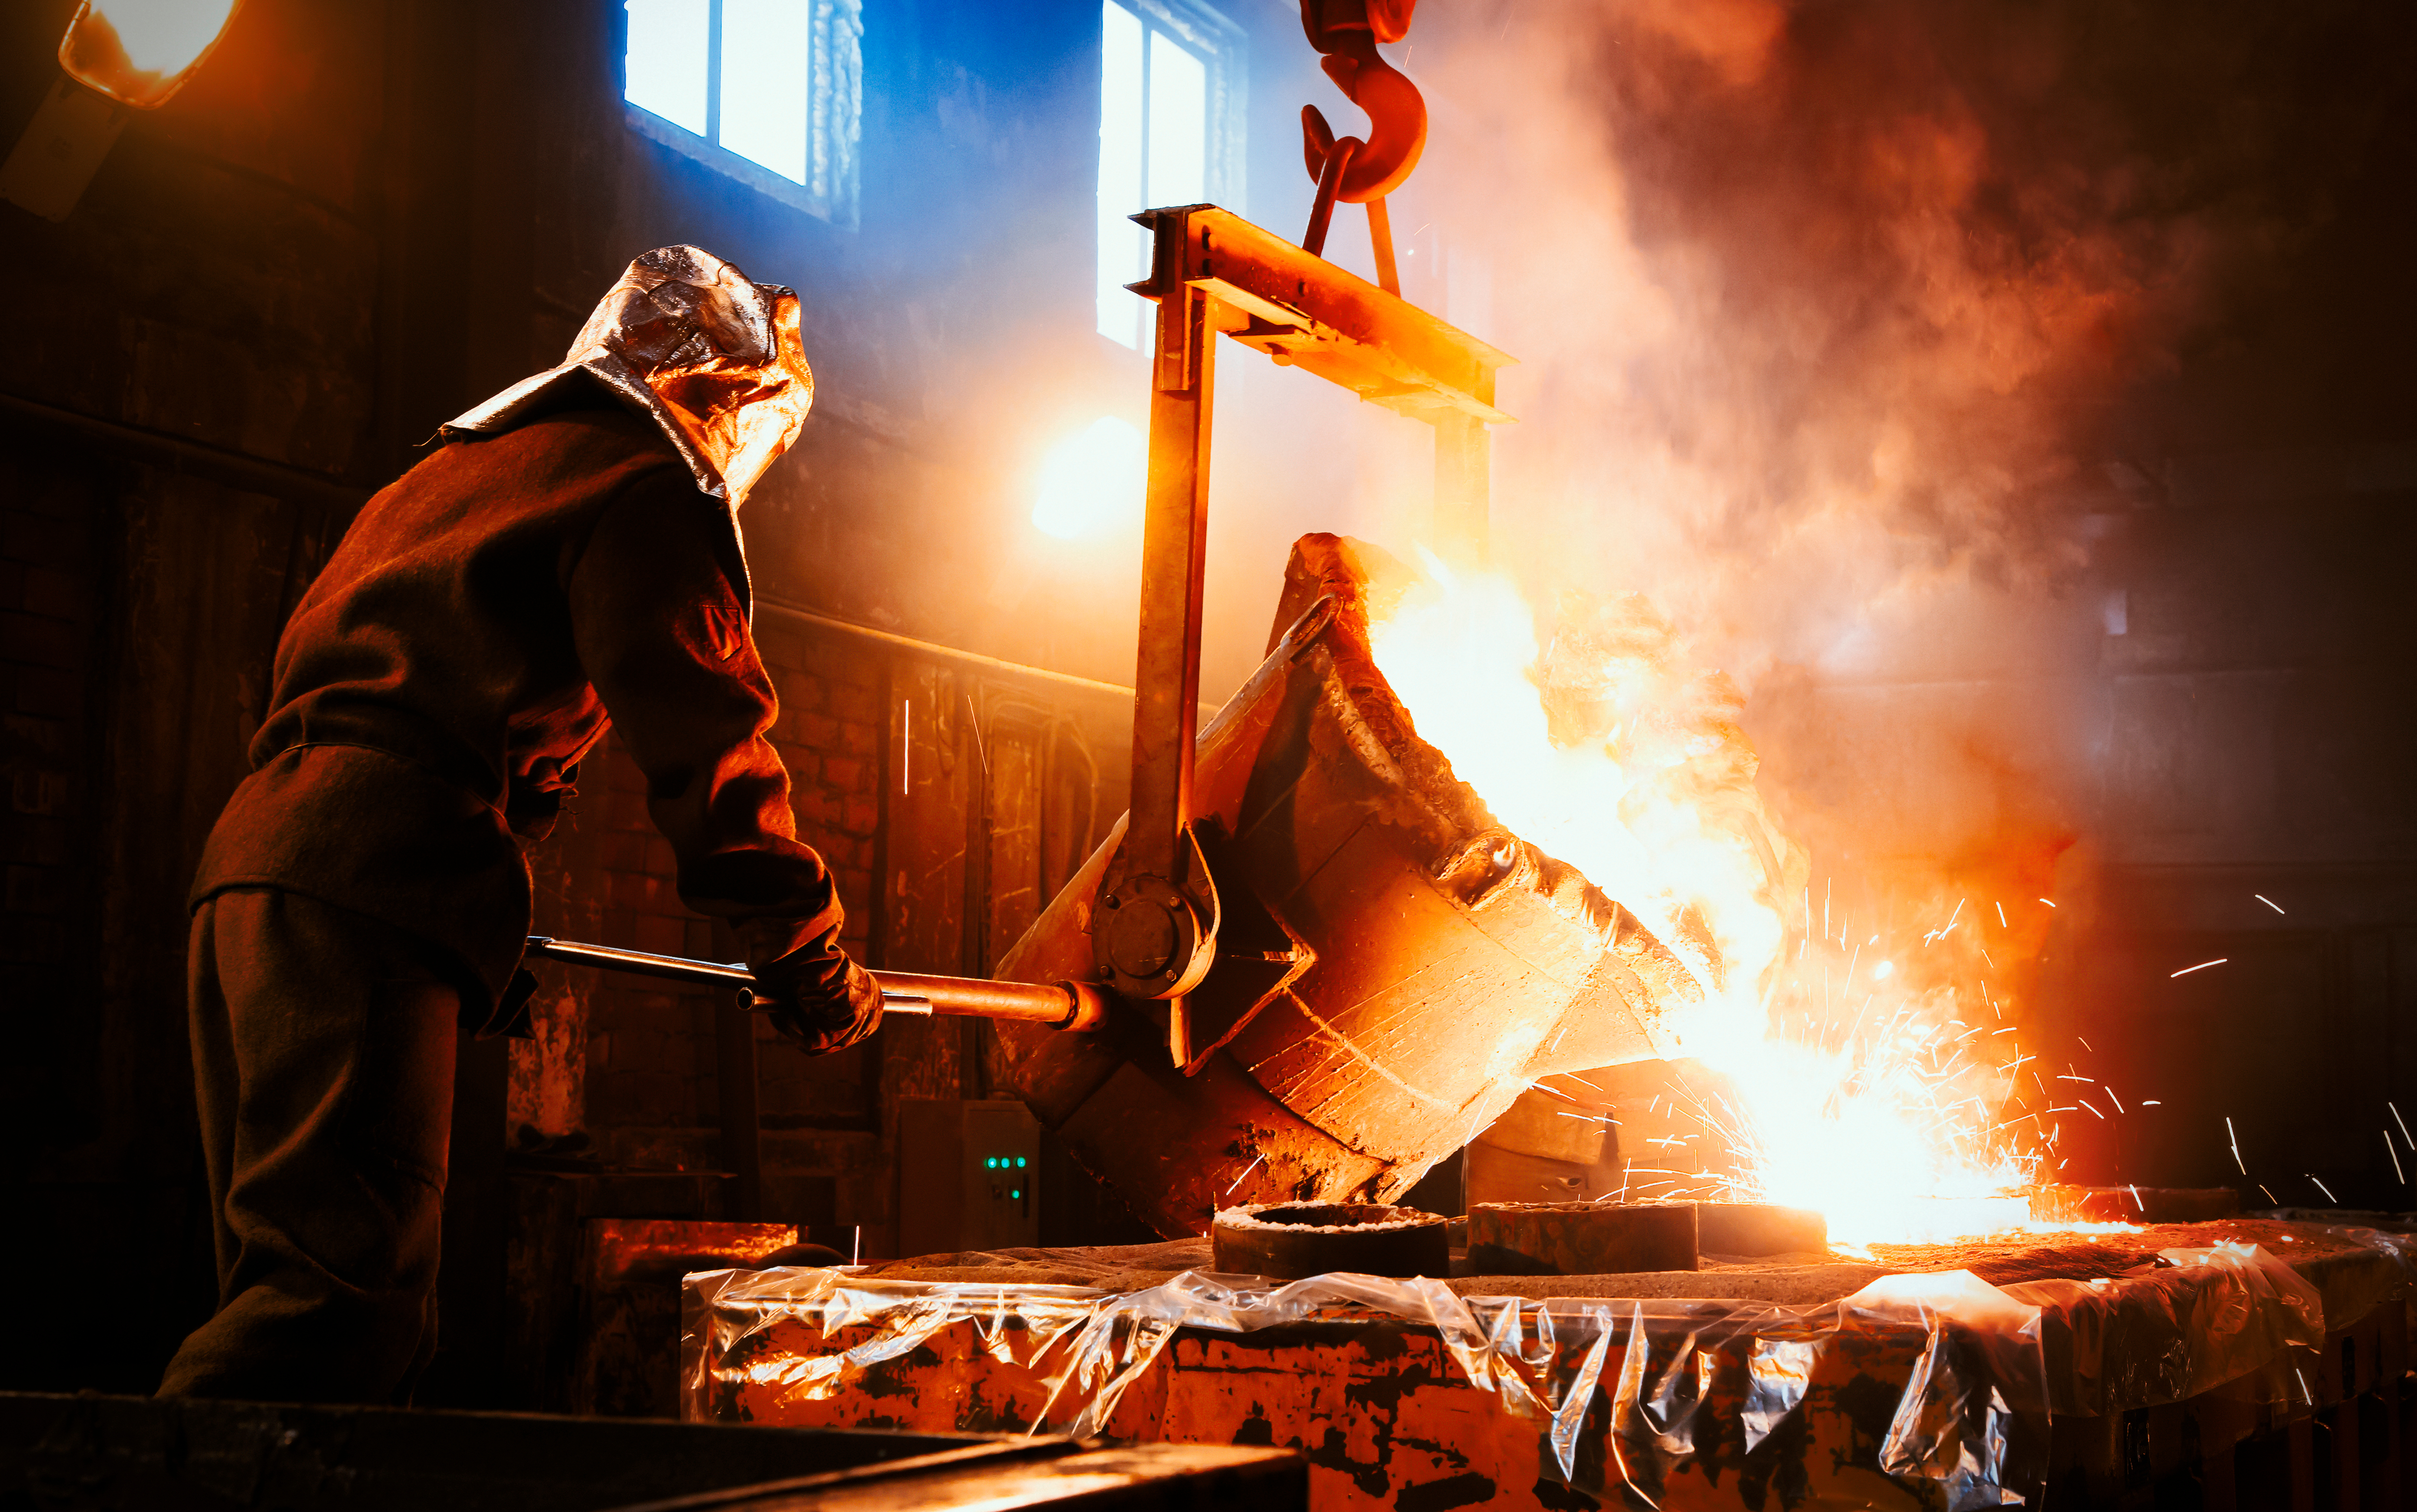 За полгода металлурги и металлисты ушли в минус на 13,3 млрд грн (c) shutterstock.com